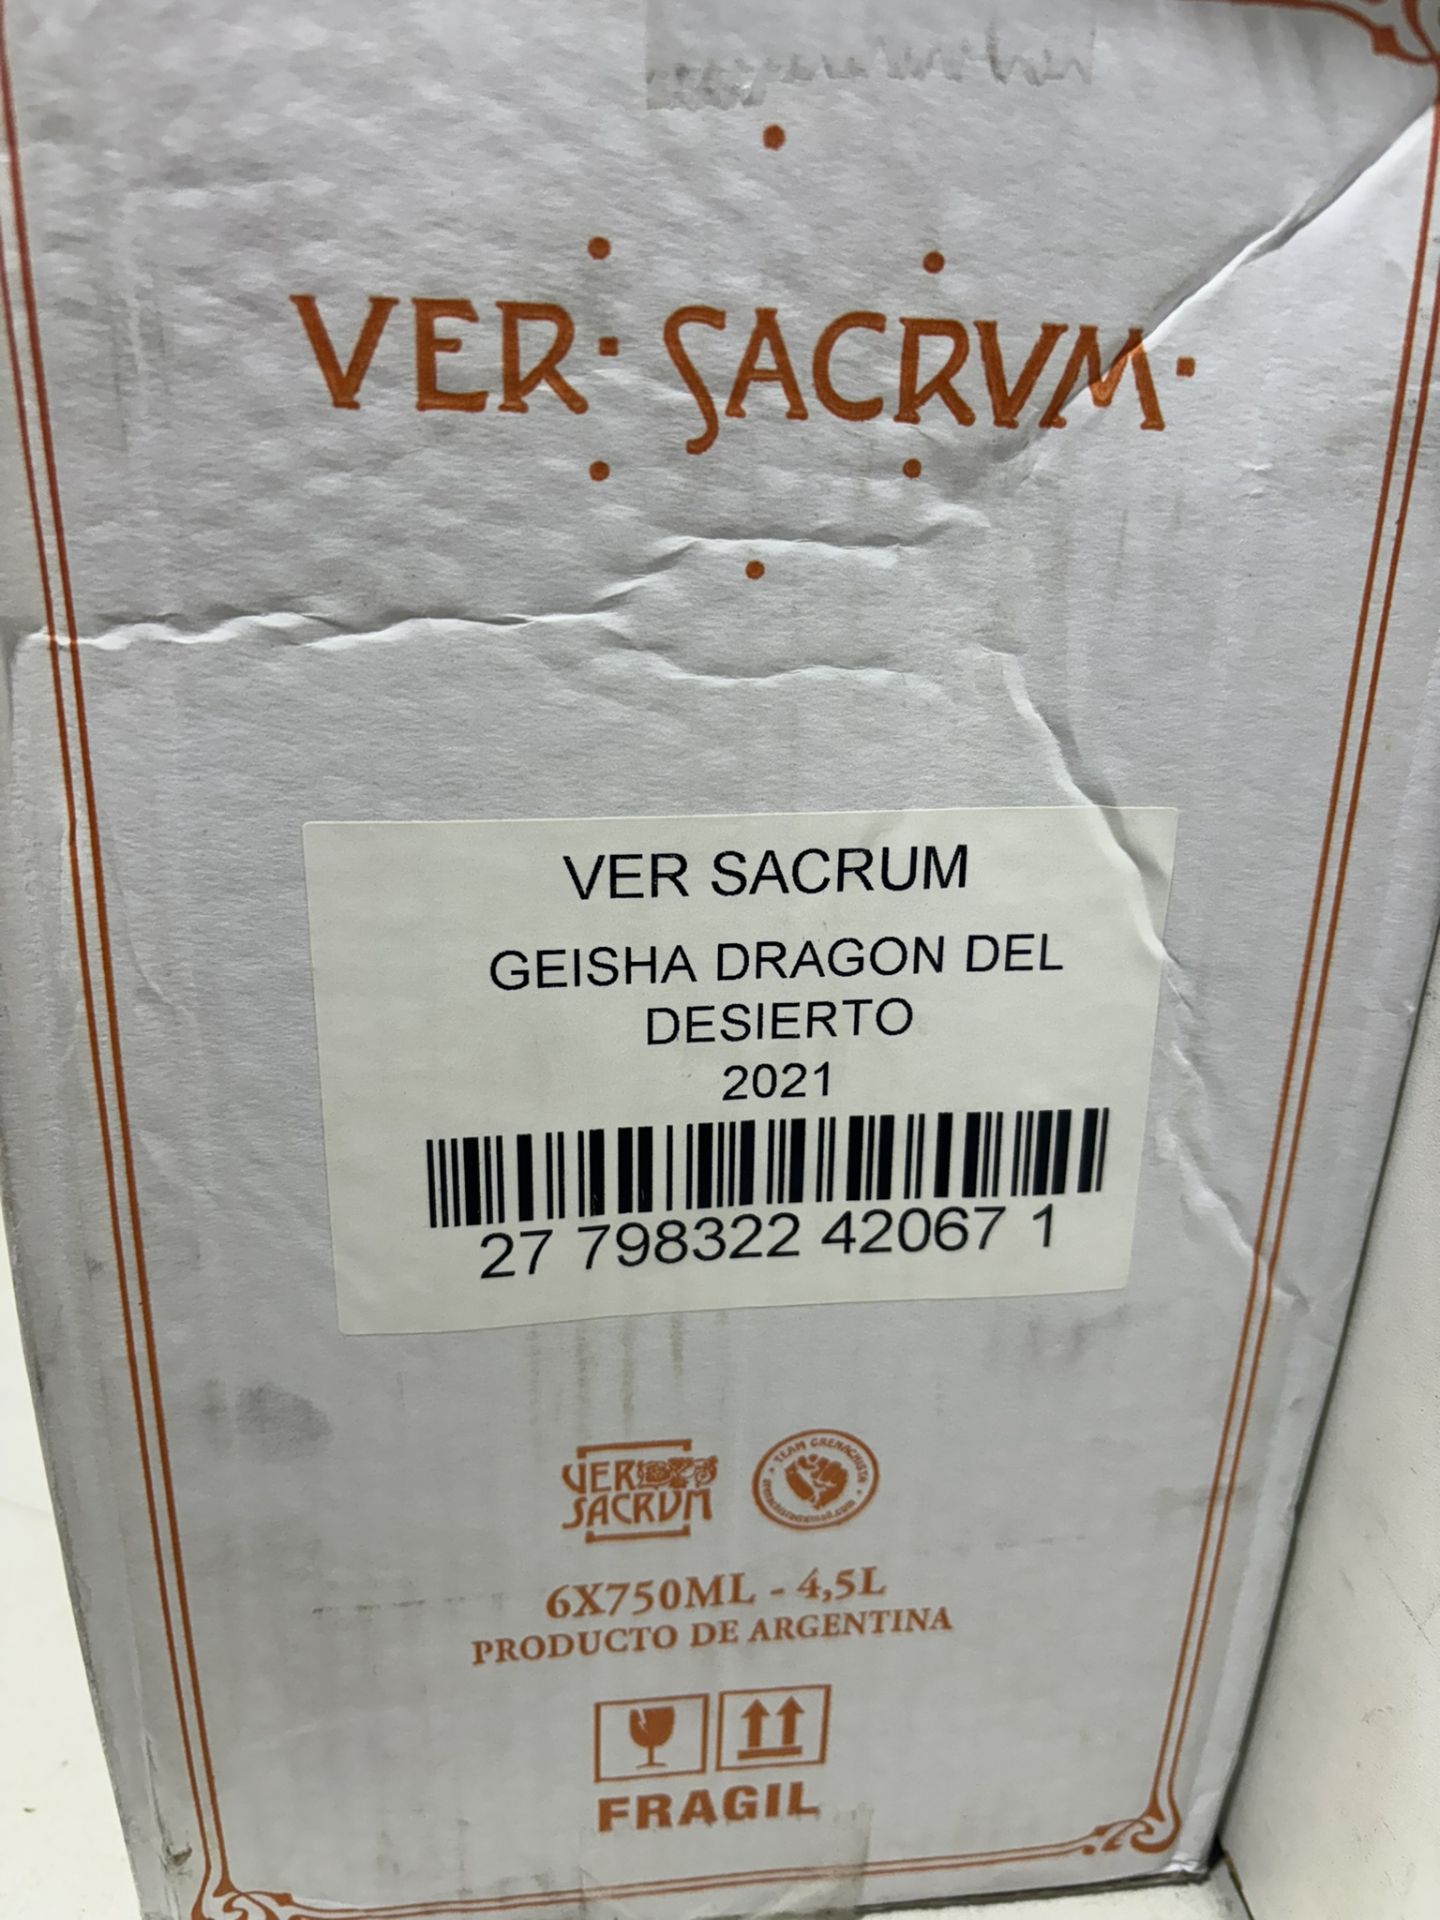 11 X Bottles Of Ver Sacrum Geisha Dragon Del Desierto 2021, White Wine - Image 6 of 6